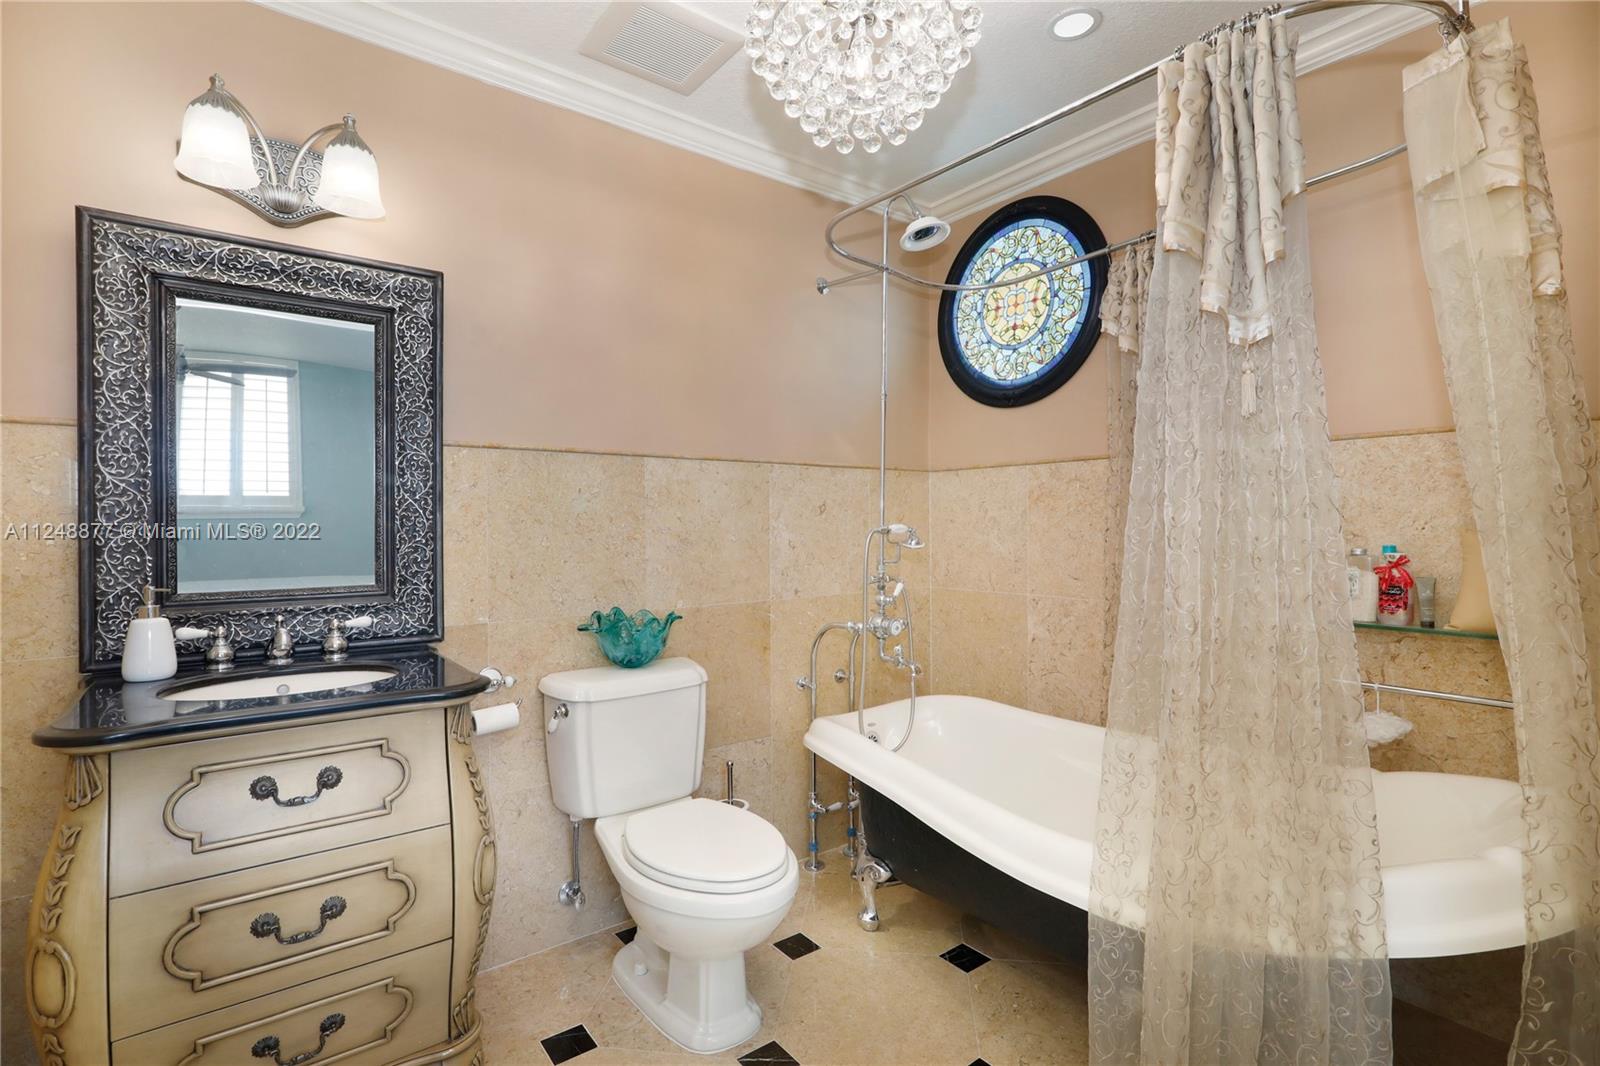 Master Bathroom with antique tub/shower.